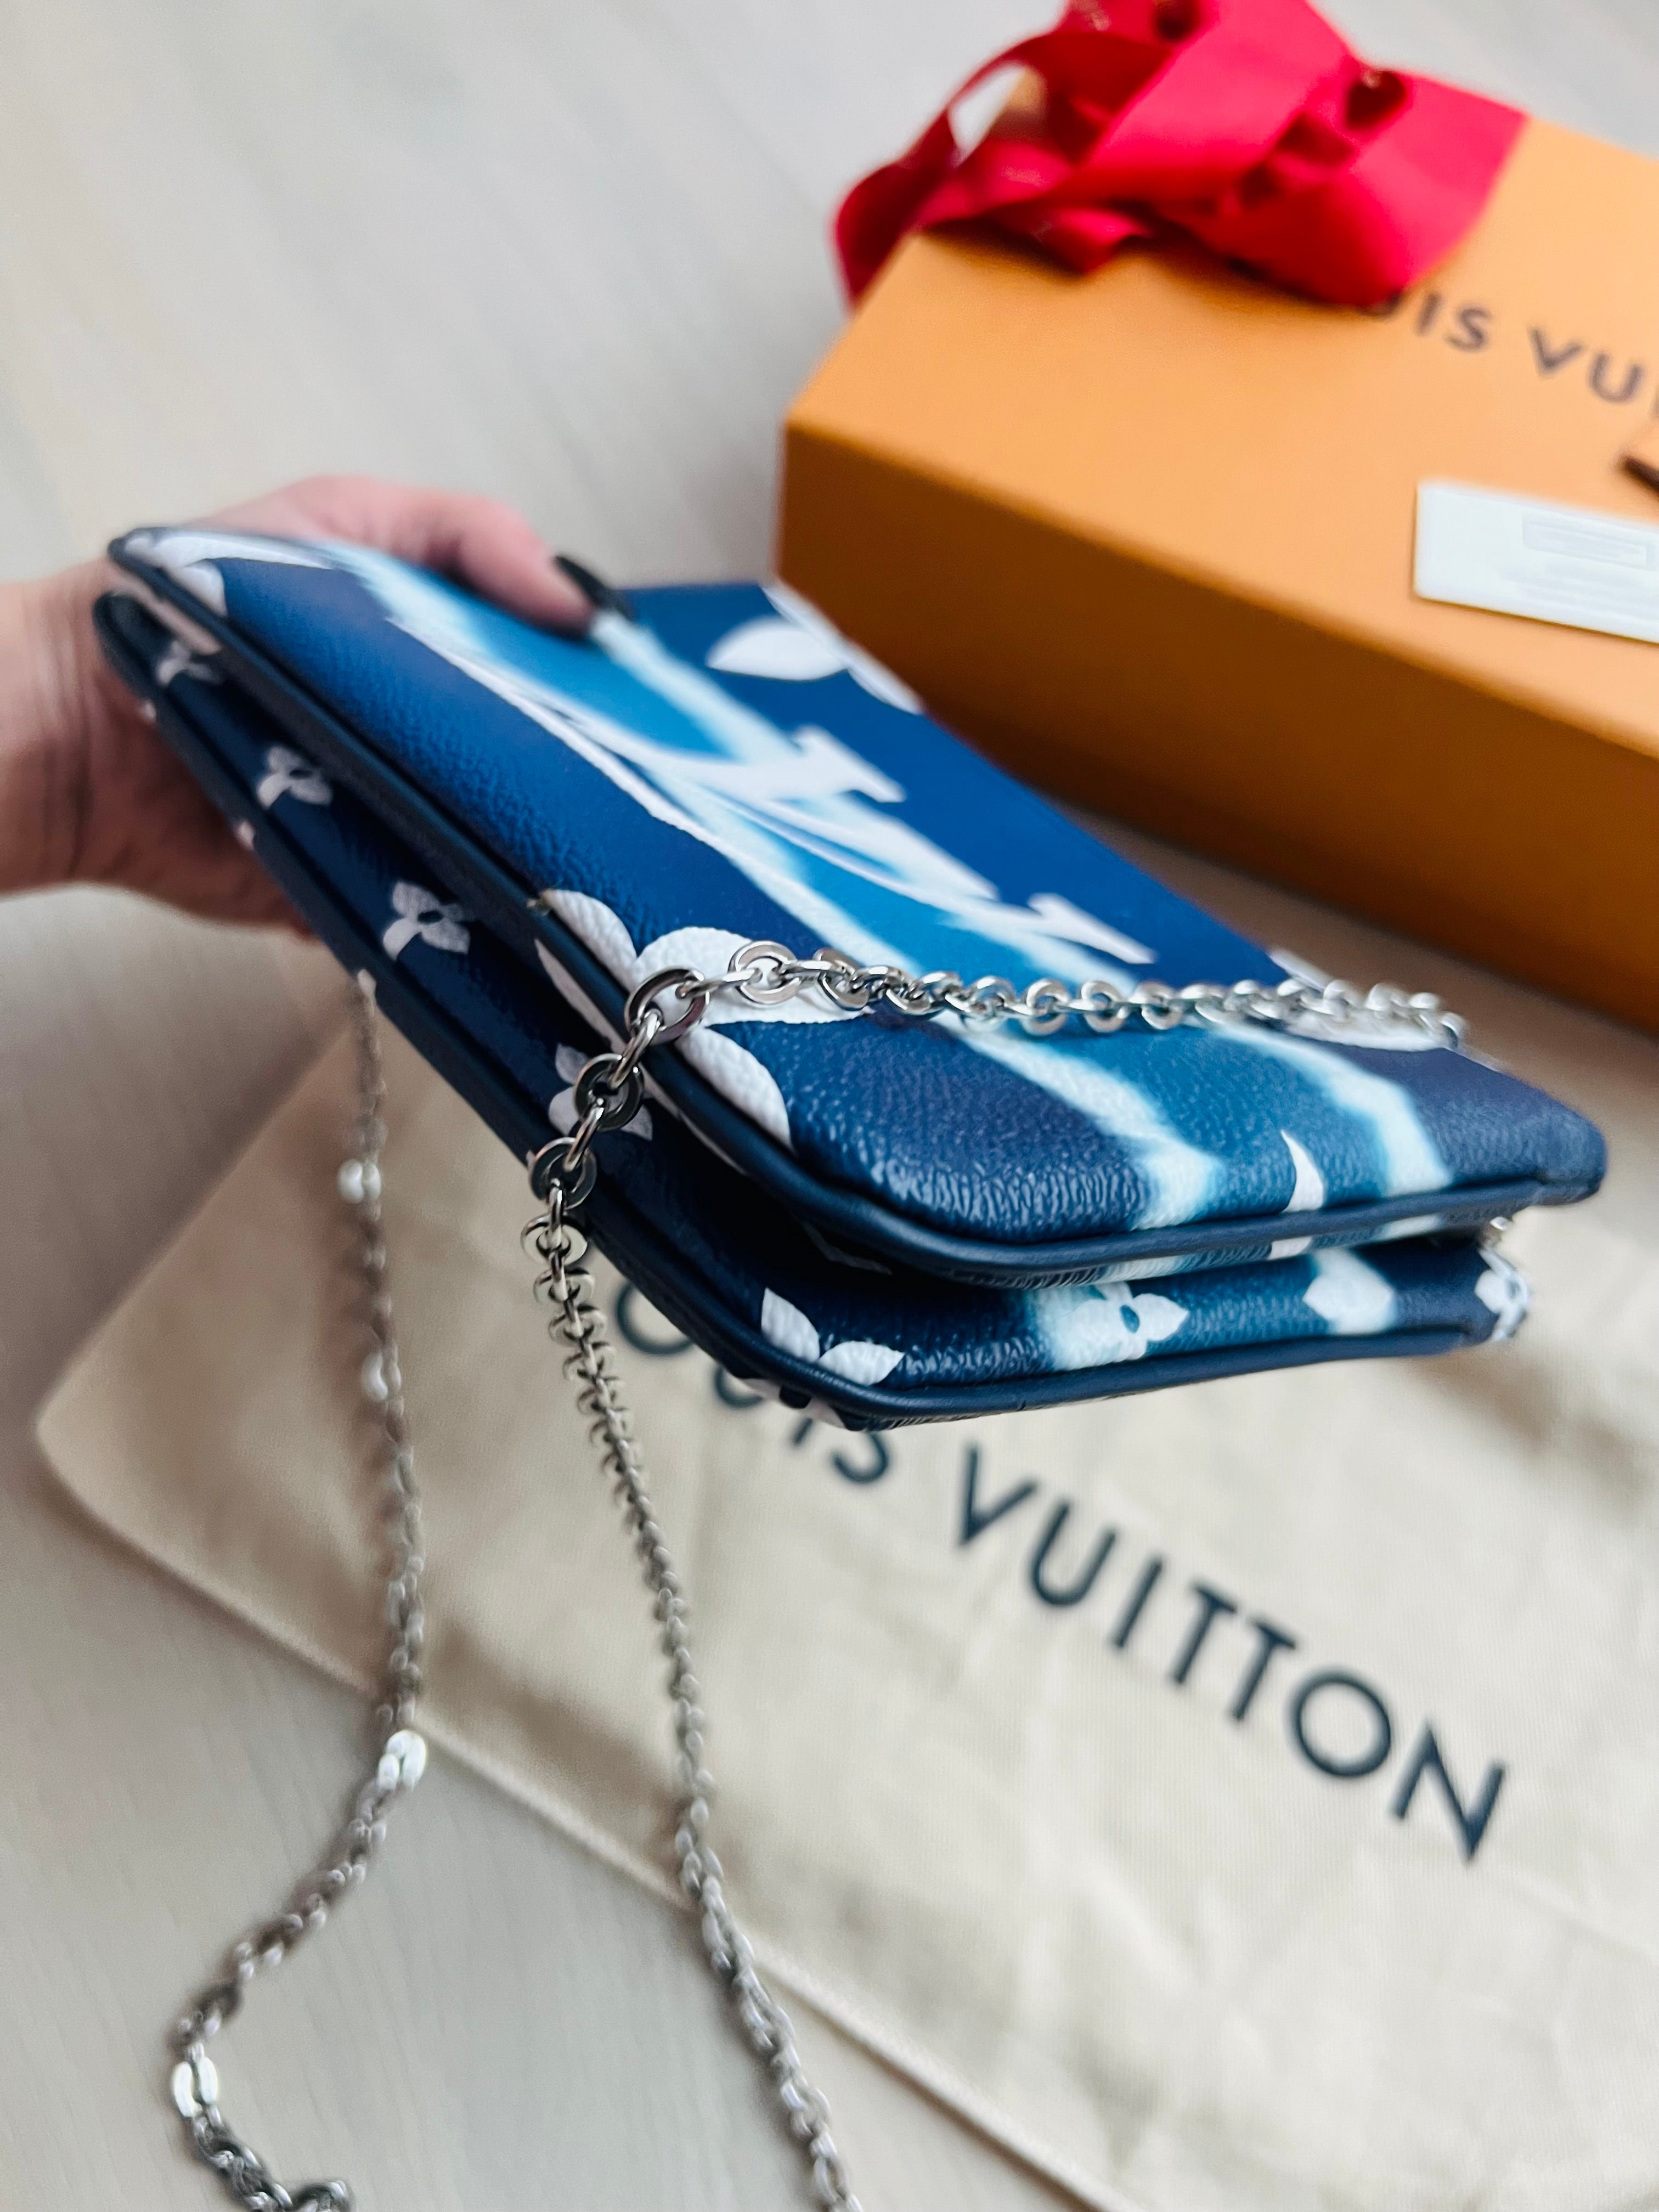 4 ways to wear the Louis Vuitton Double Zip Pochette Such a